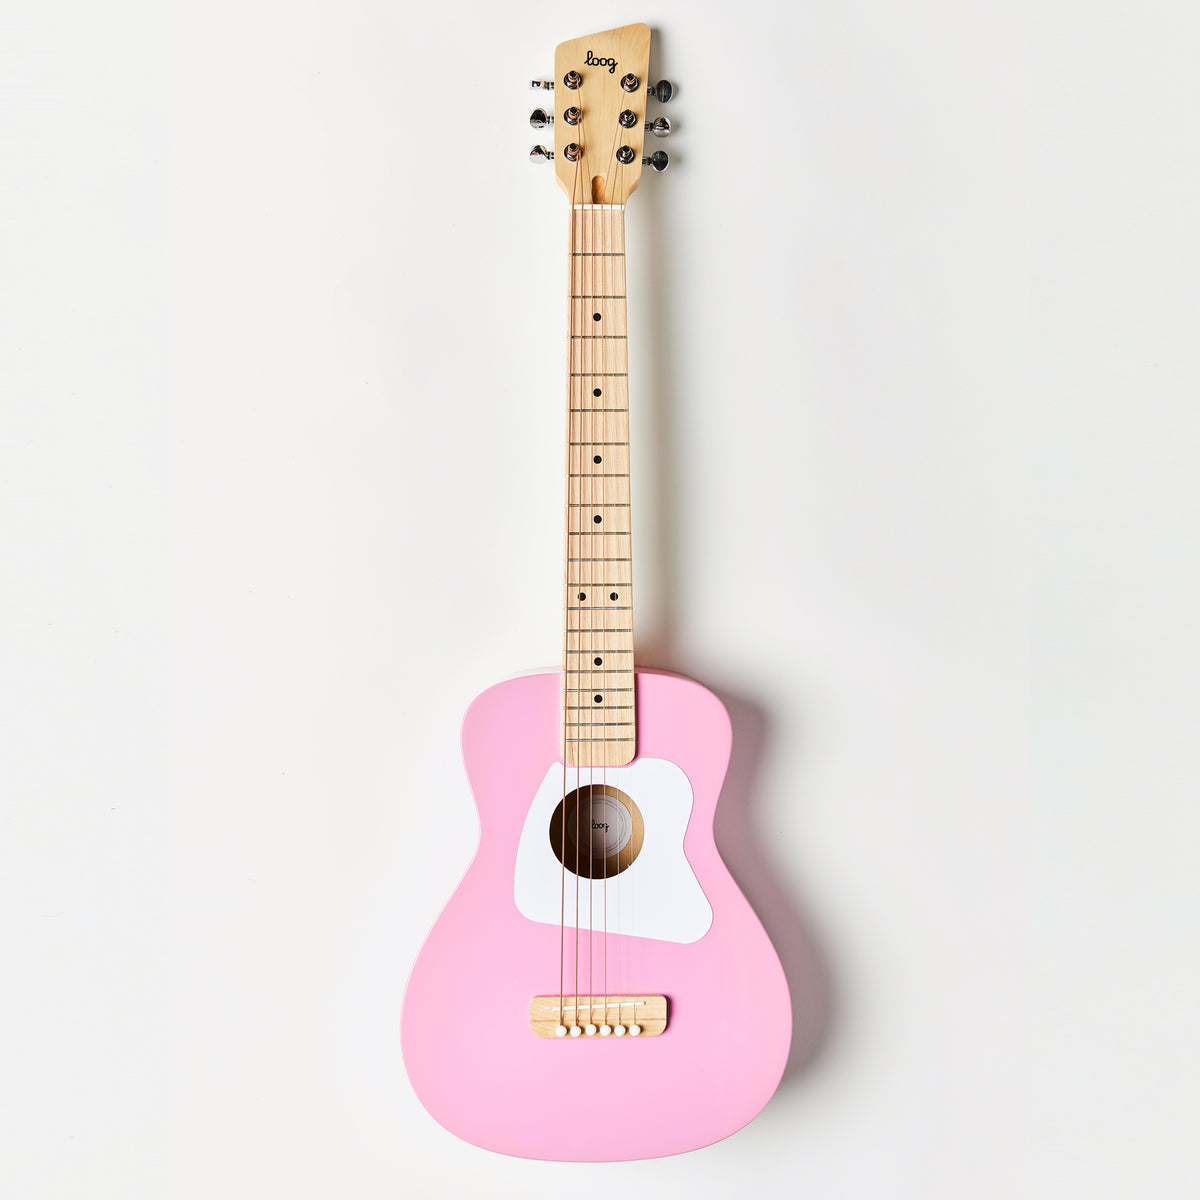 pink-guitar-strap-gig-bag pink-guitar-strap-wall-hanger pink-guitar-strap-stand